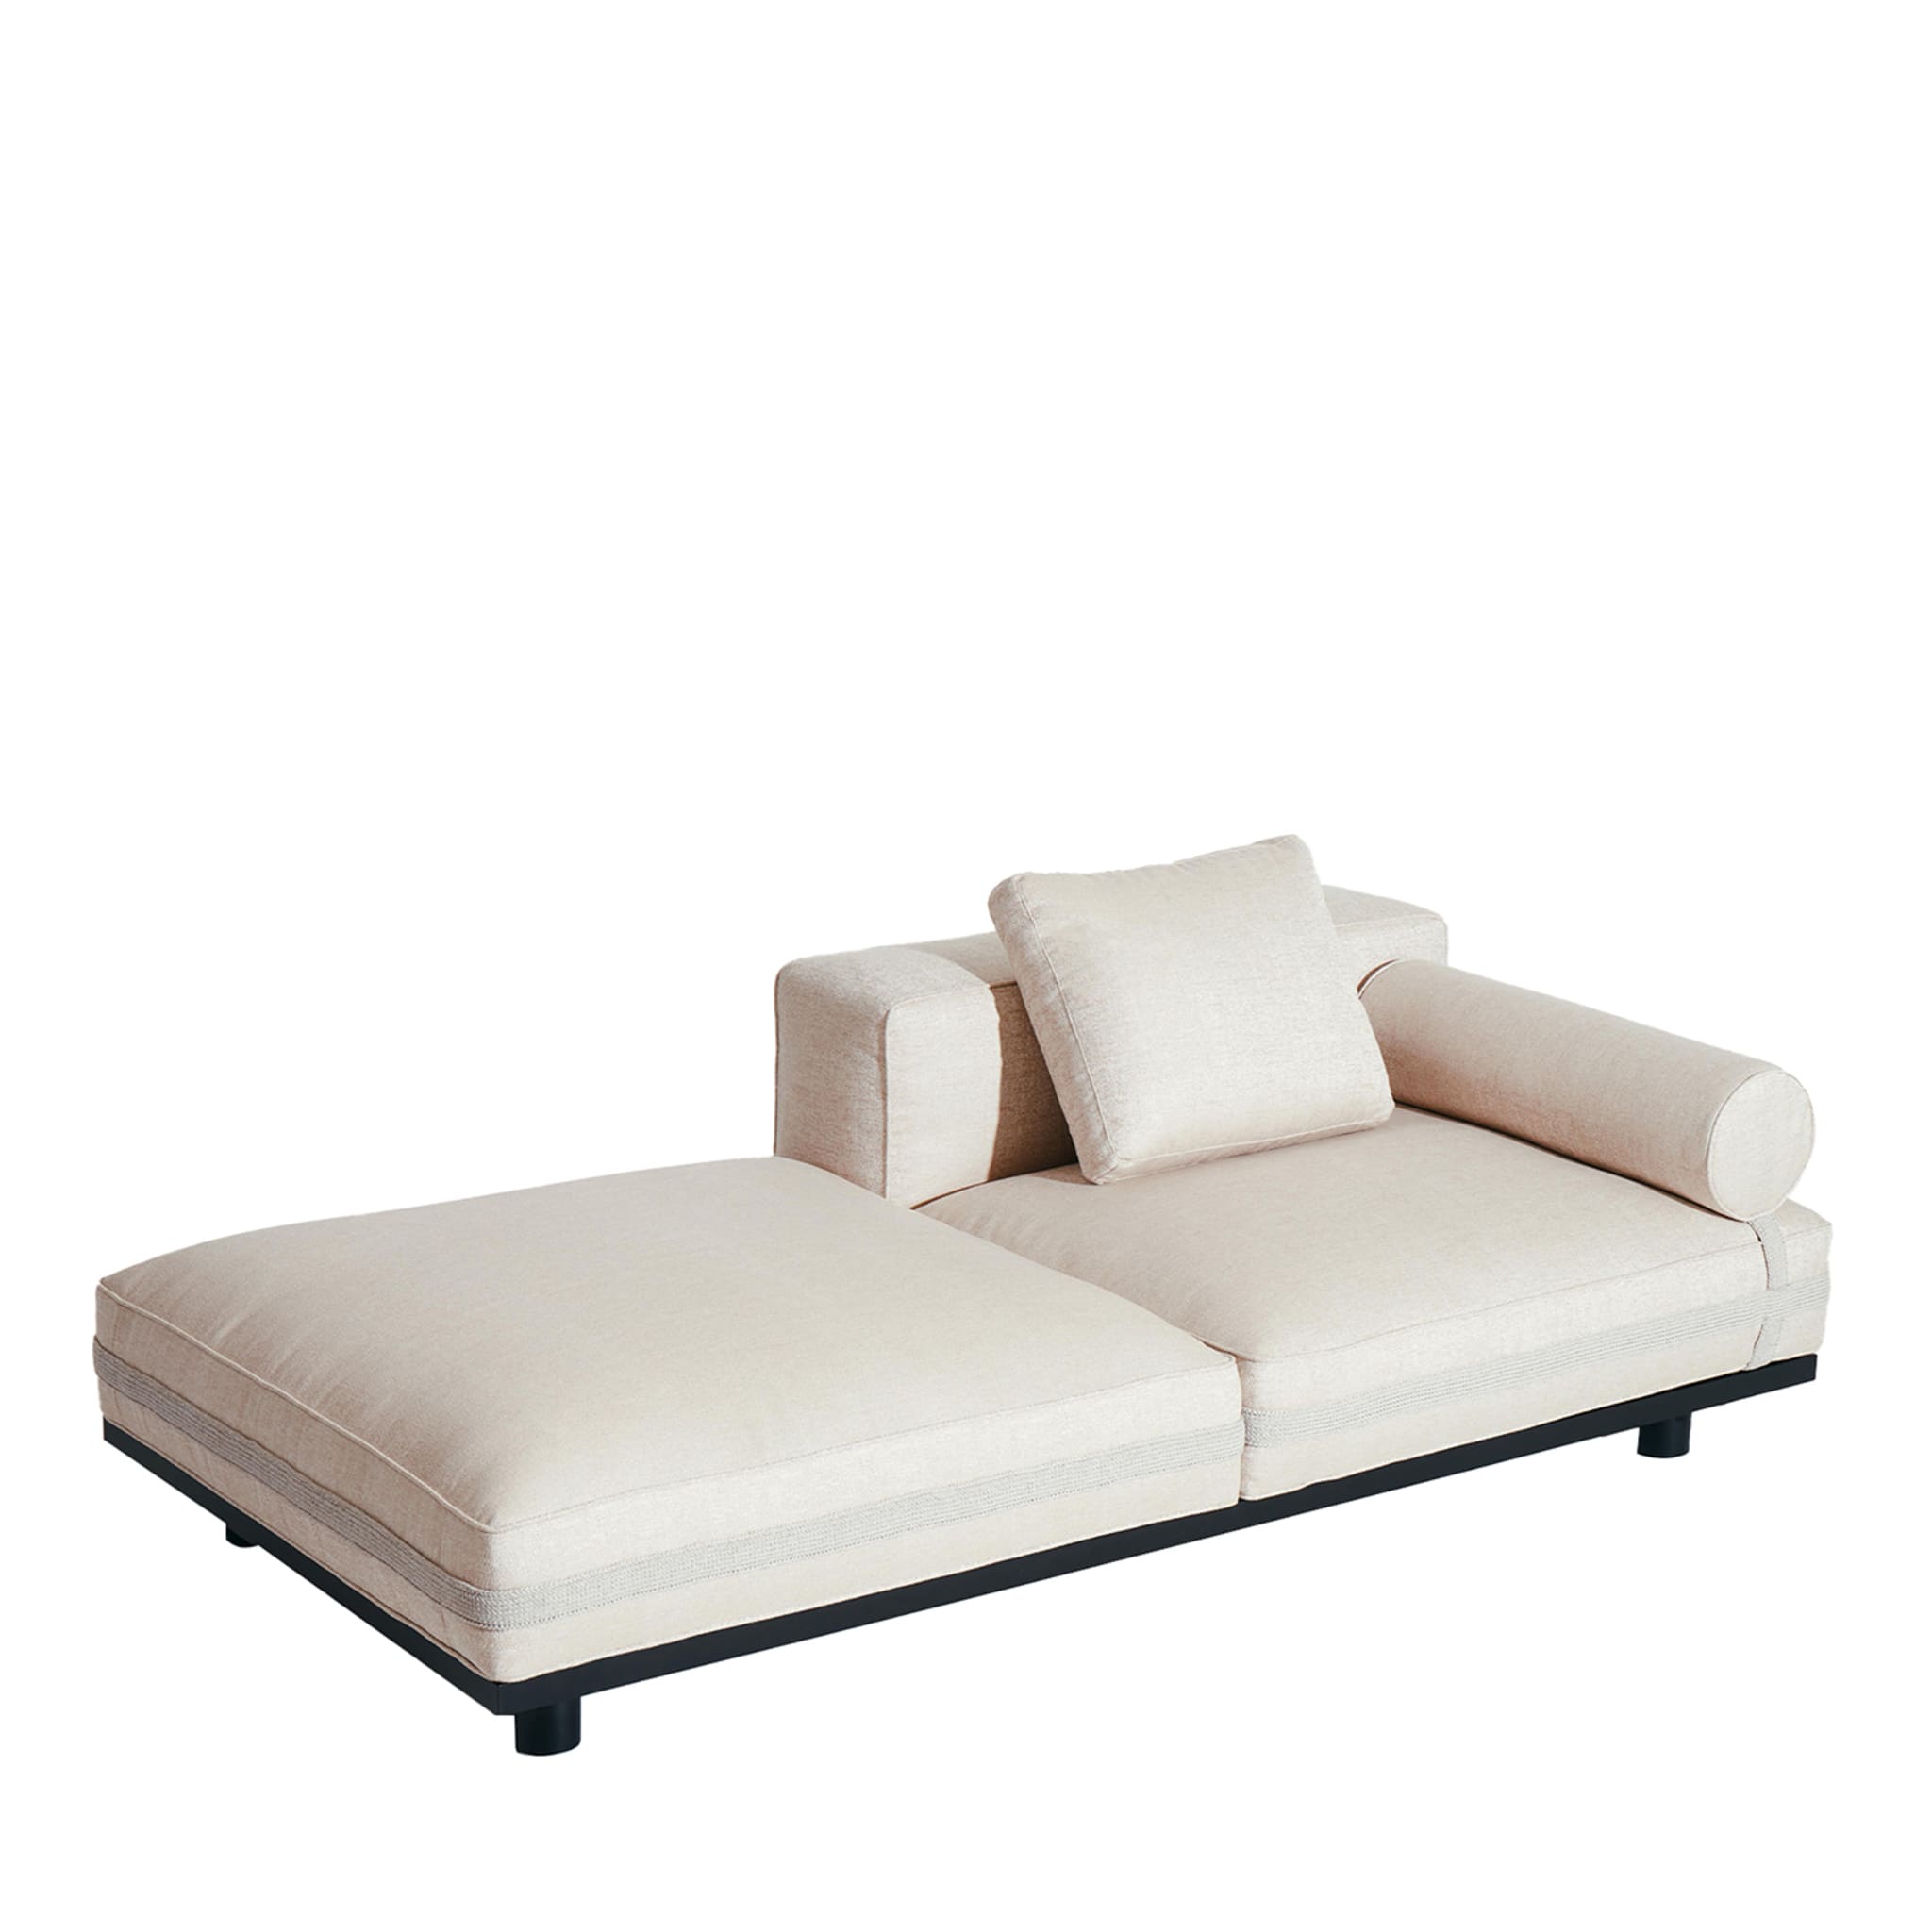 Saint Remy White Modular Sofa by Luca Nichetto - Main view